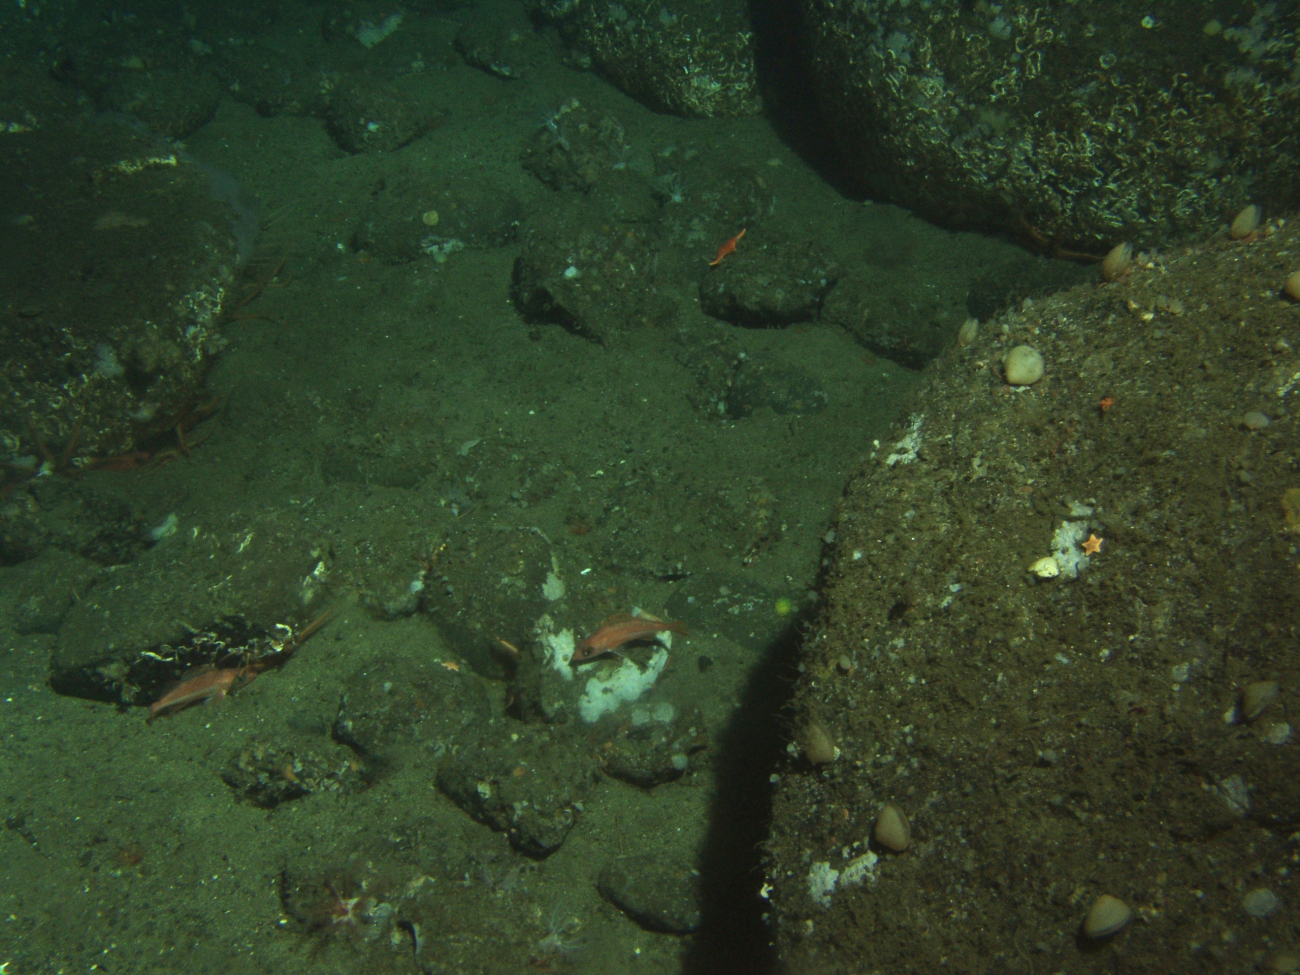 Juvenile rockfish among boulders and sand at 130 meters depth